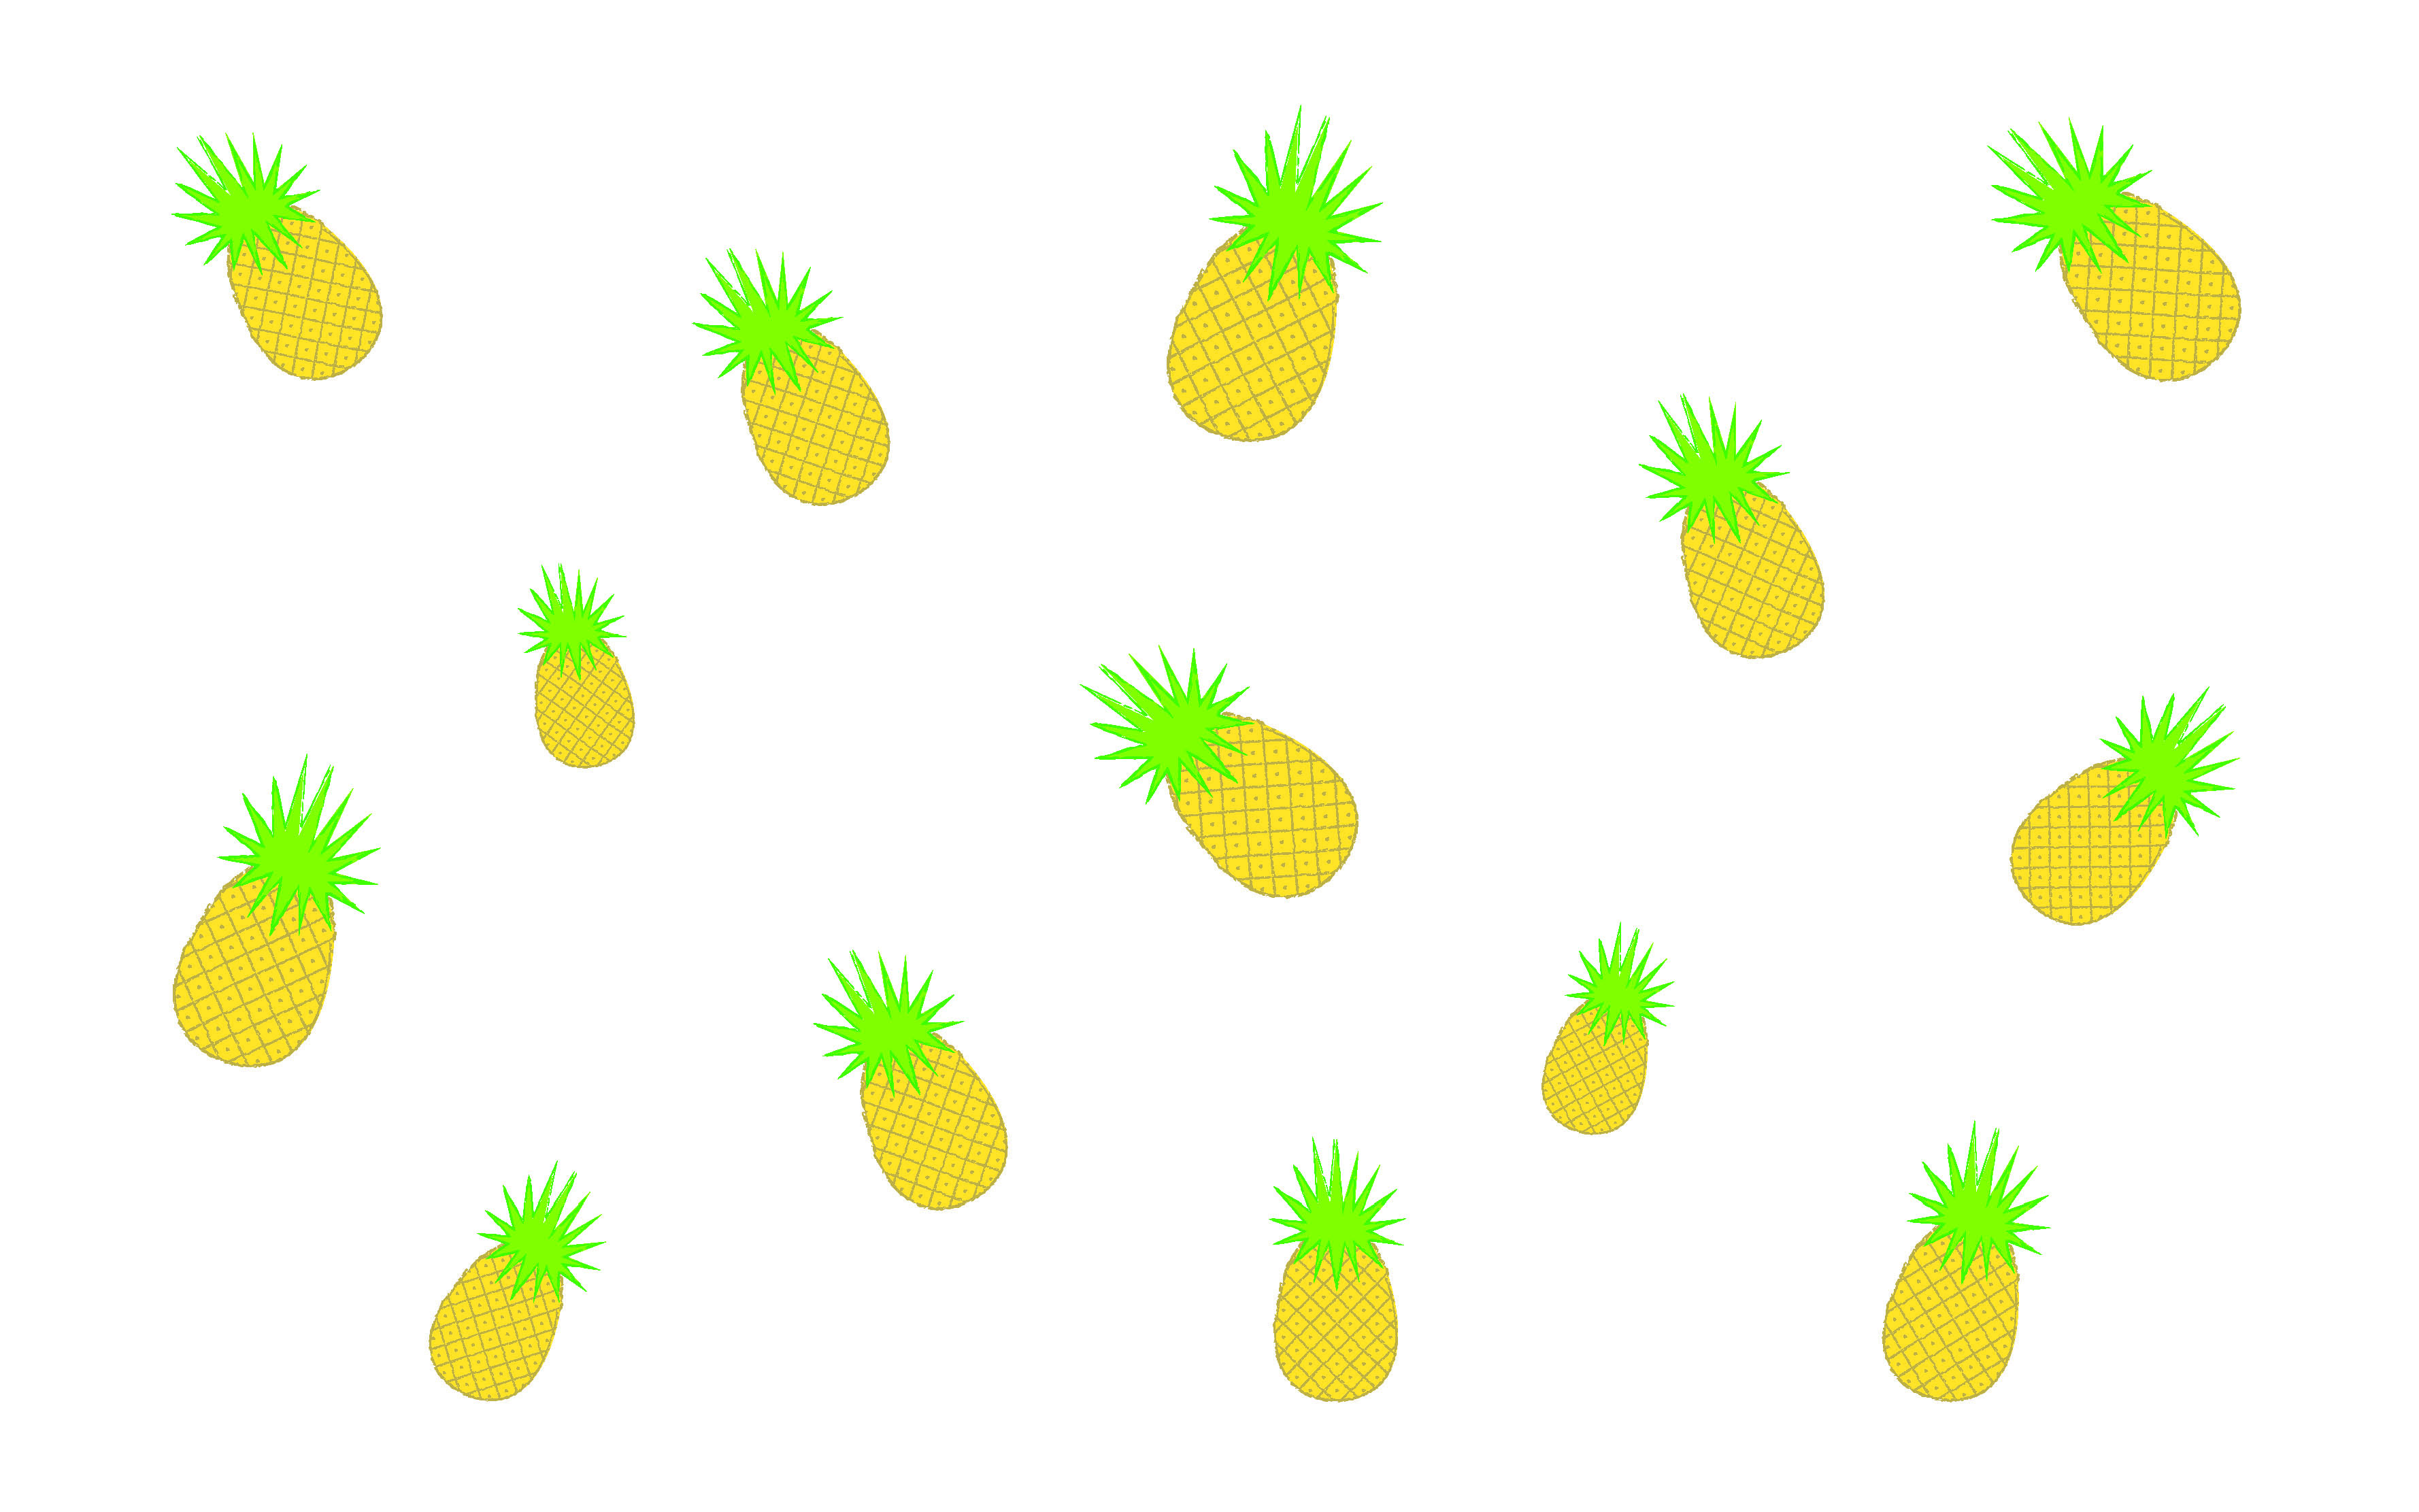 pineapple wallpaper tumblr pinapple desktop wallpaper 2jpg